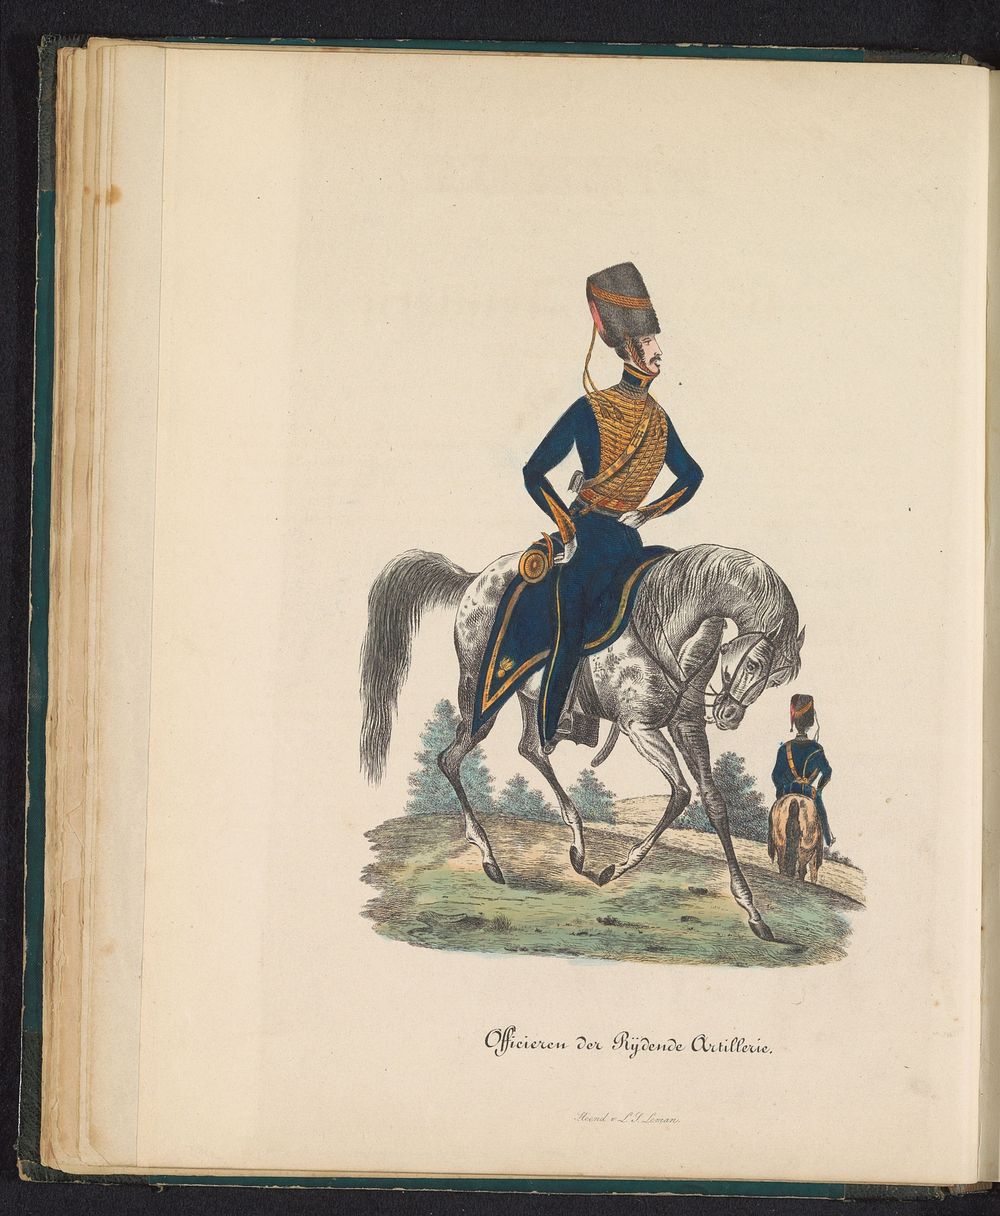 Uniform van de officieren van de rijdende artillerie, 1845 (1845) by Louis Salomon Leman and Louis Salomon Leman